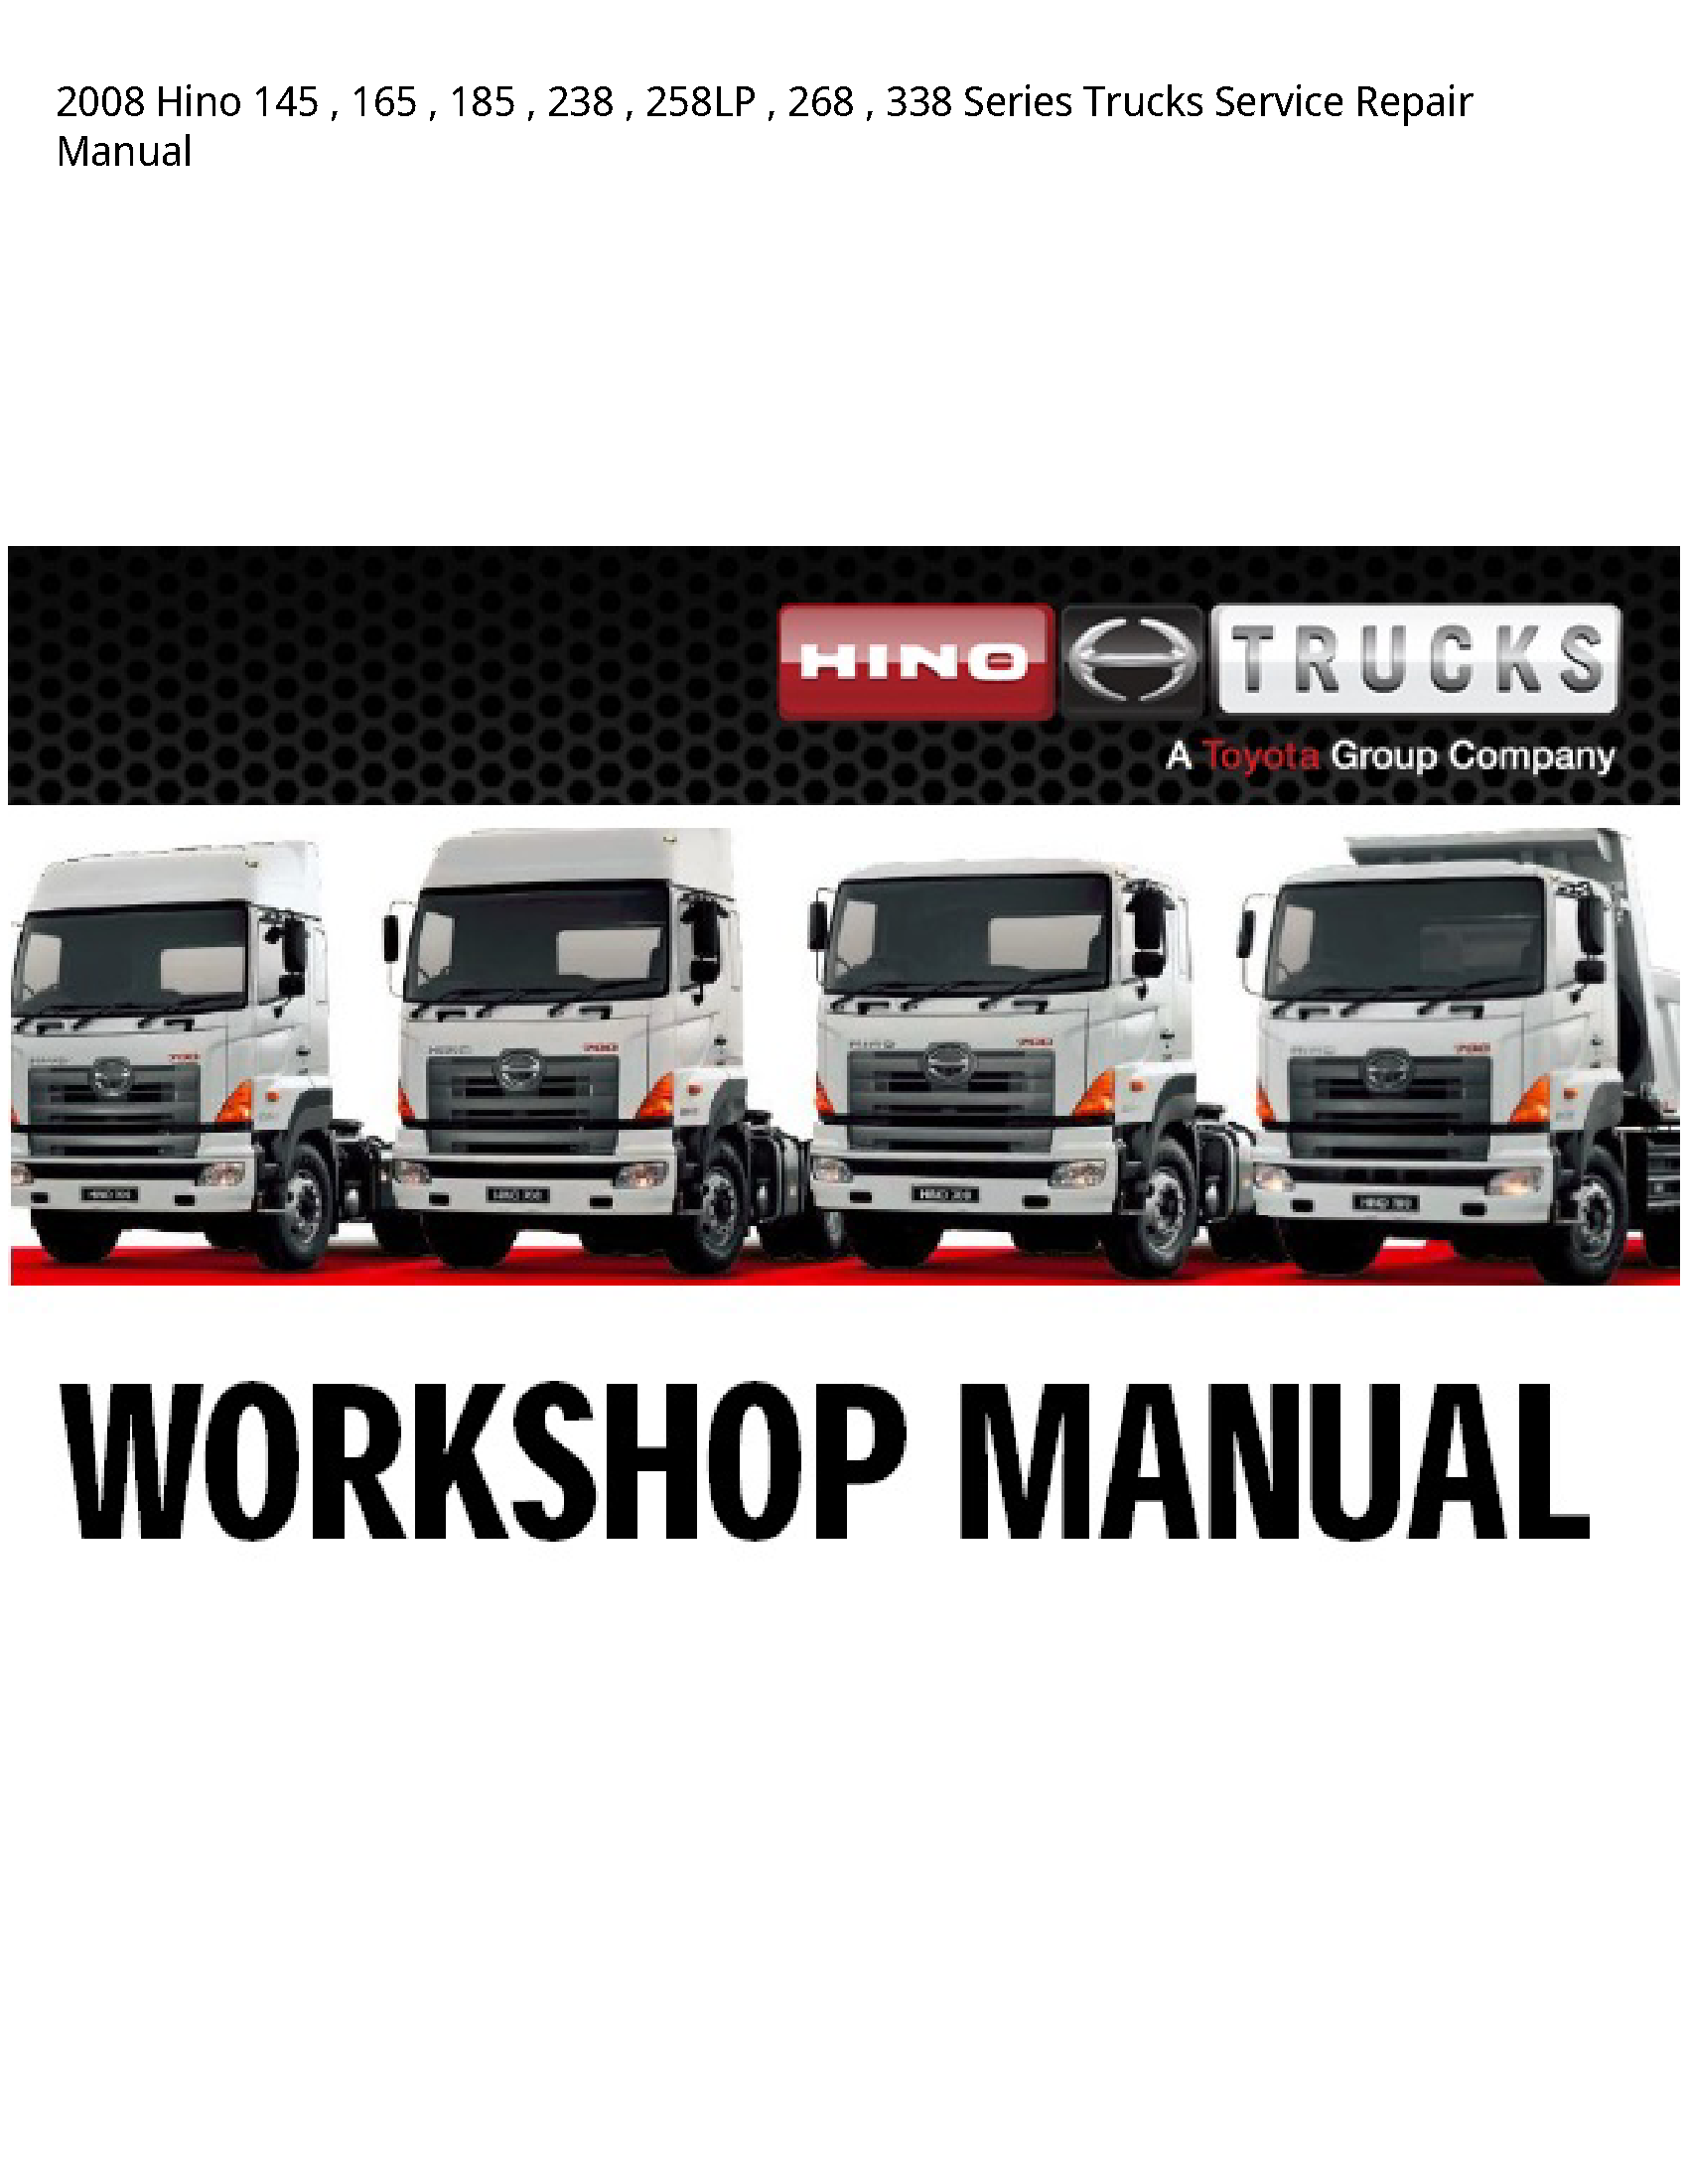 Hino 145 Series Trucks manual